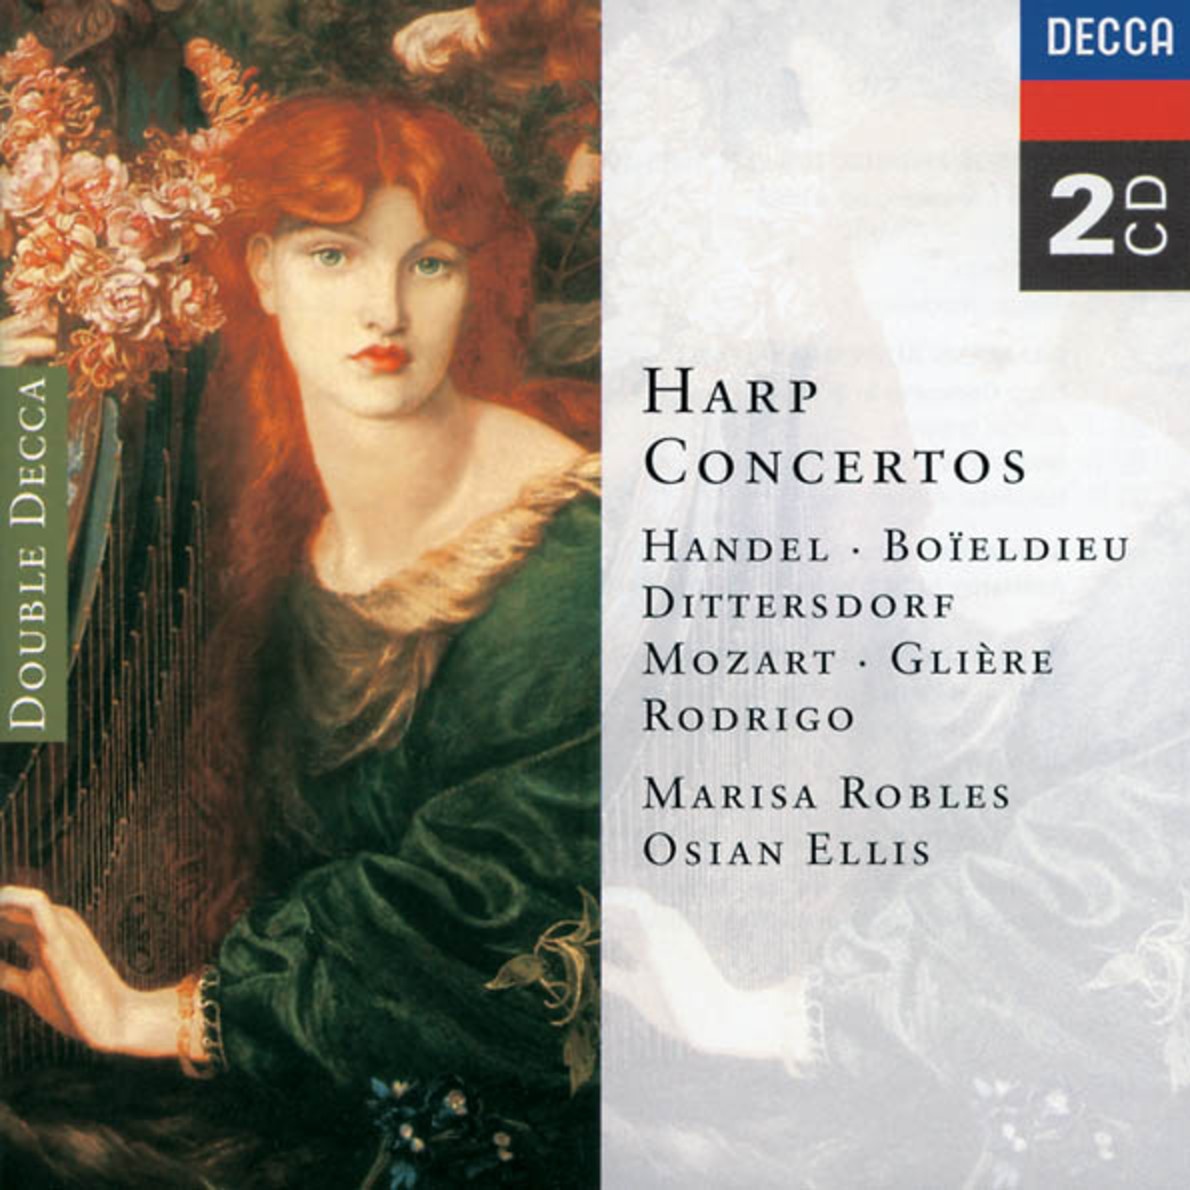 Concerto for Flute, Harp, and Orchestra in C, K.299:3. Rondo. Allegro